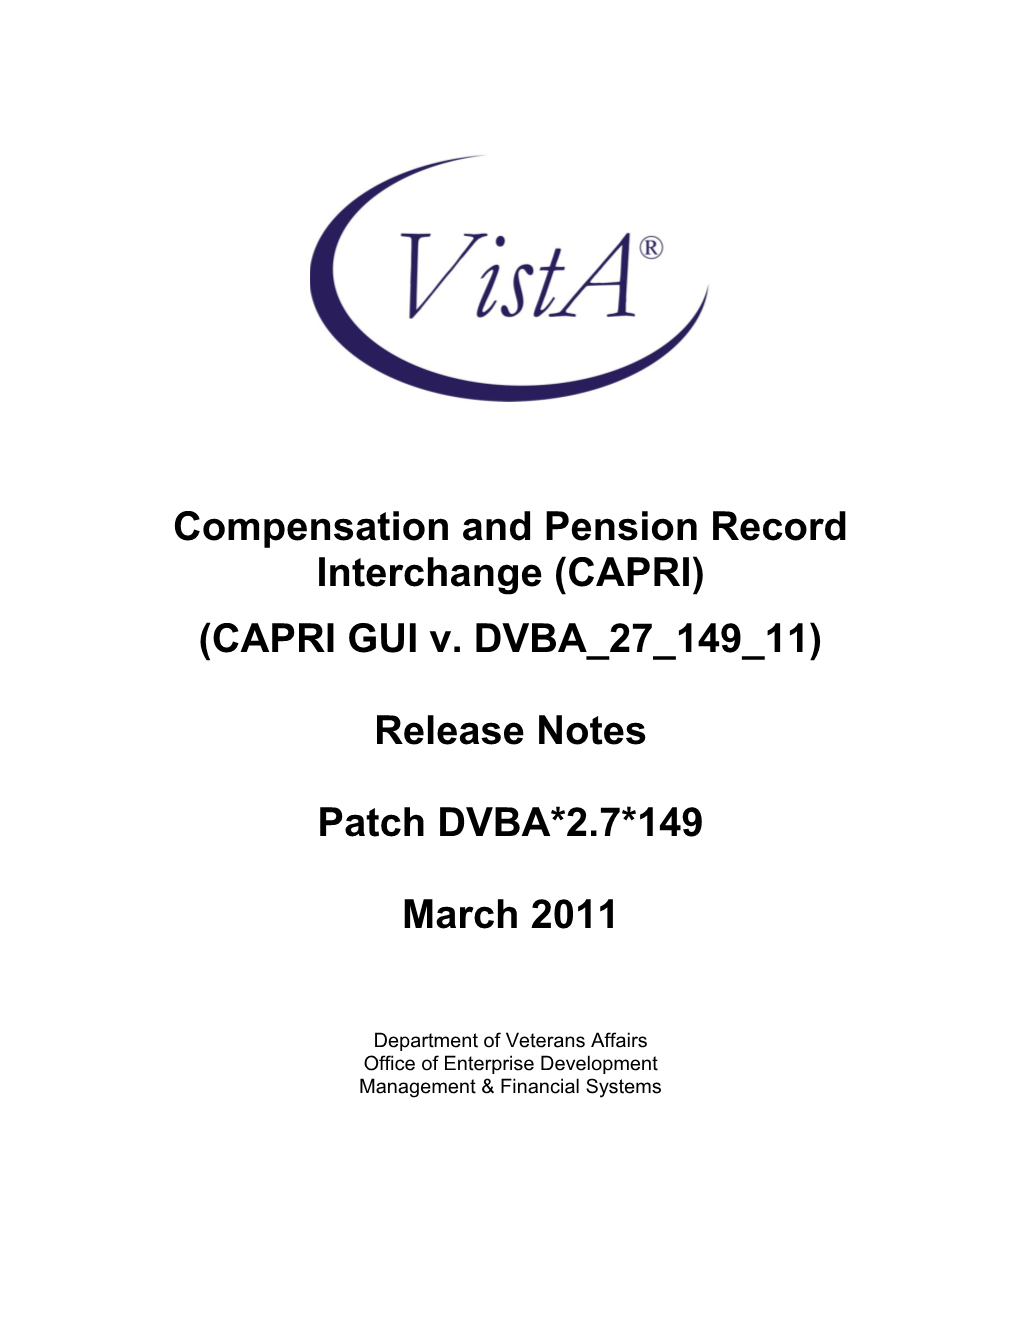 Compensation and Pension Record Interchange (CAPRI) GUI Release Notes